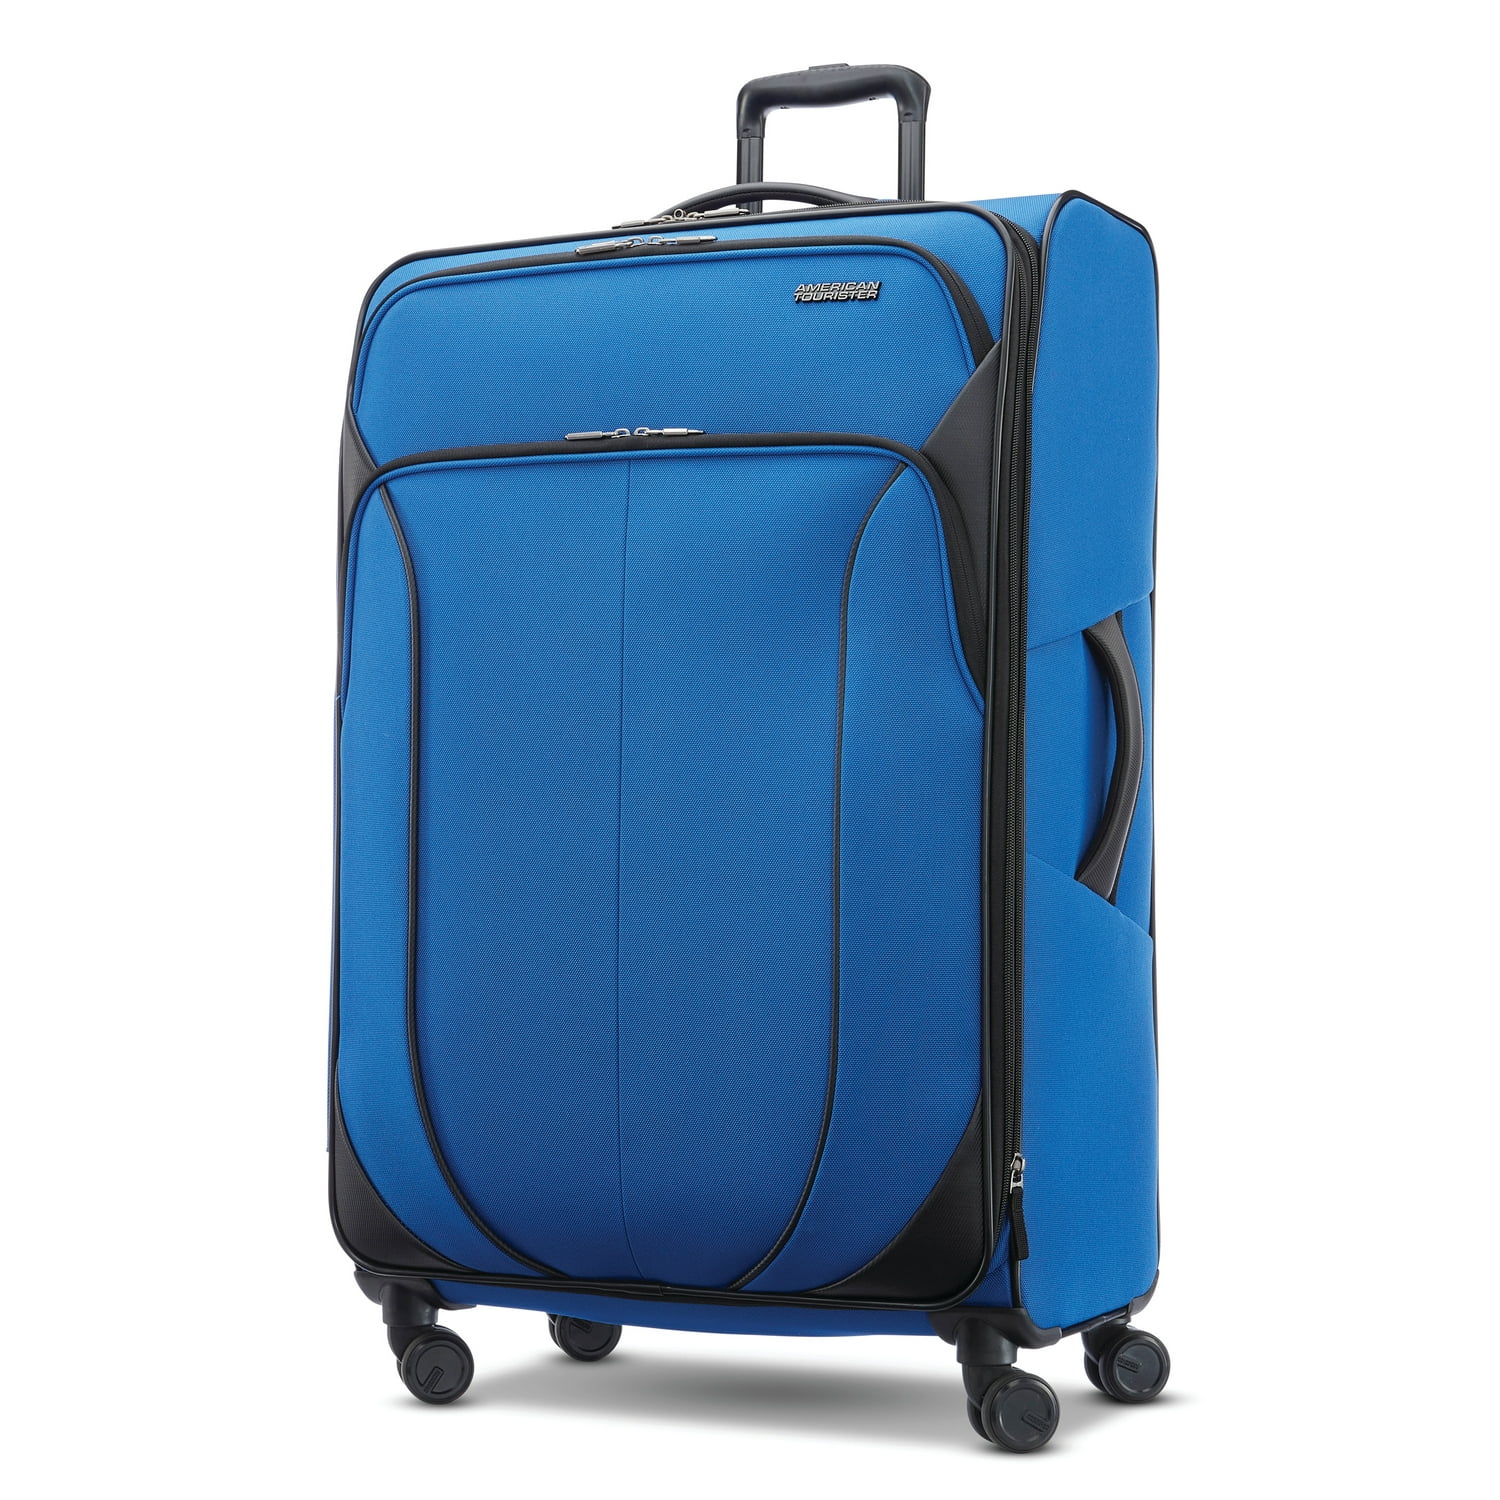 Walmart+ Members: 28" American Tourister 4 KIX 2.0 Upright Spinner Luggage (Classic Blue) + $8 Walmart Cash $55.30 + Free Shipping